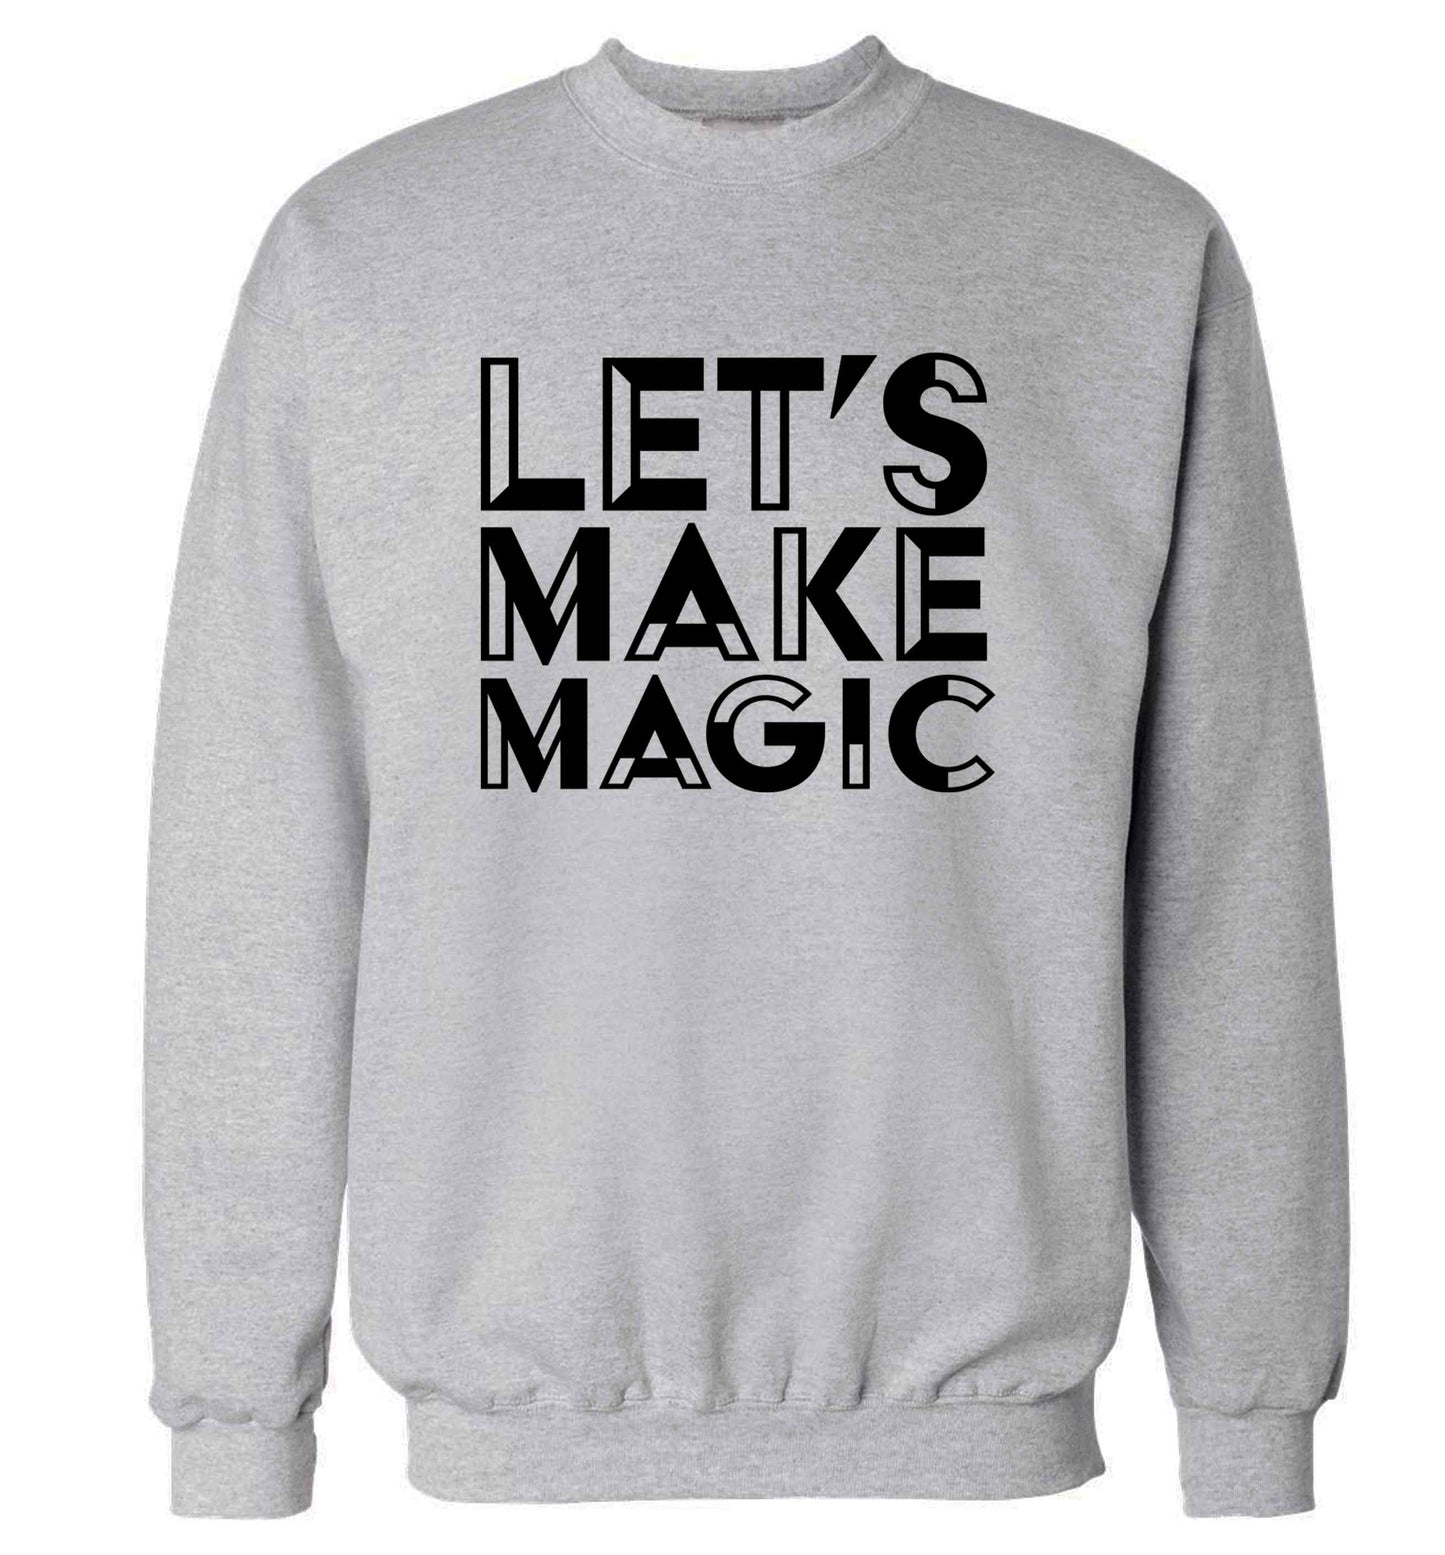 Let's make magic adult's unisex grey sweater 2XL